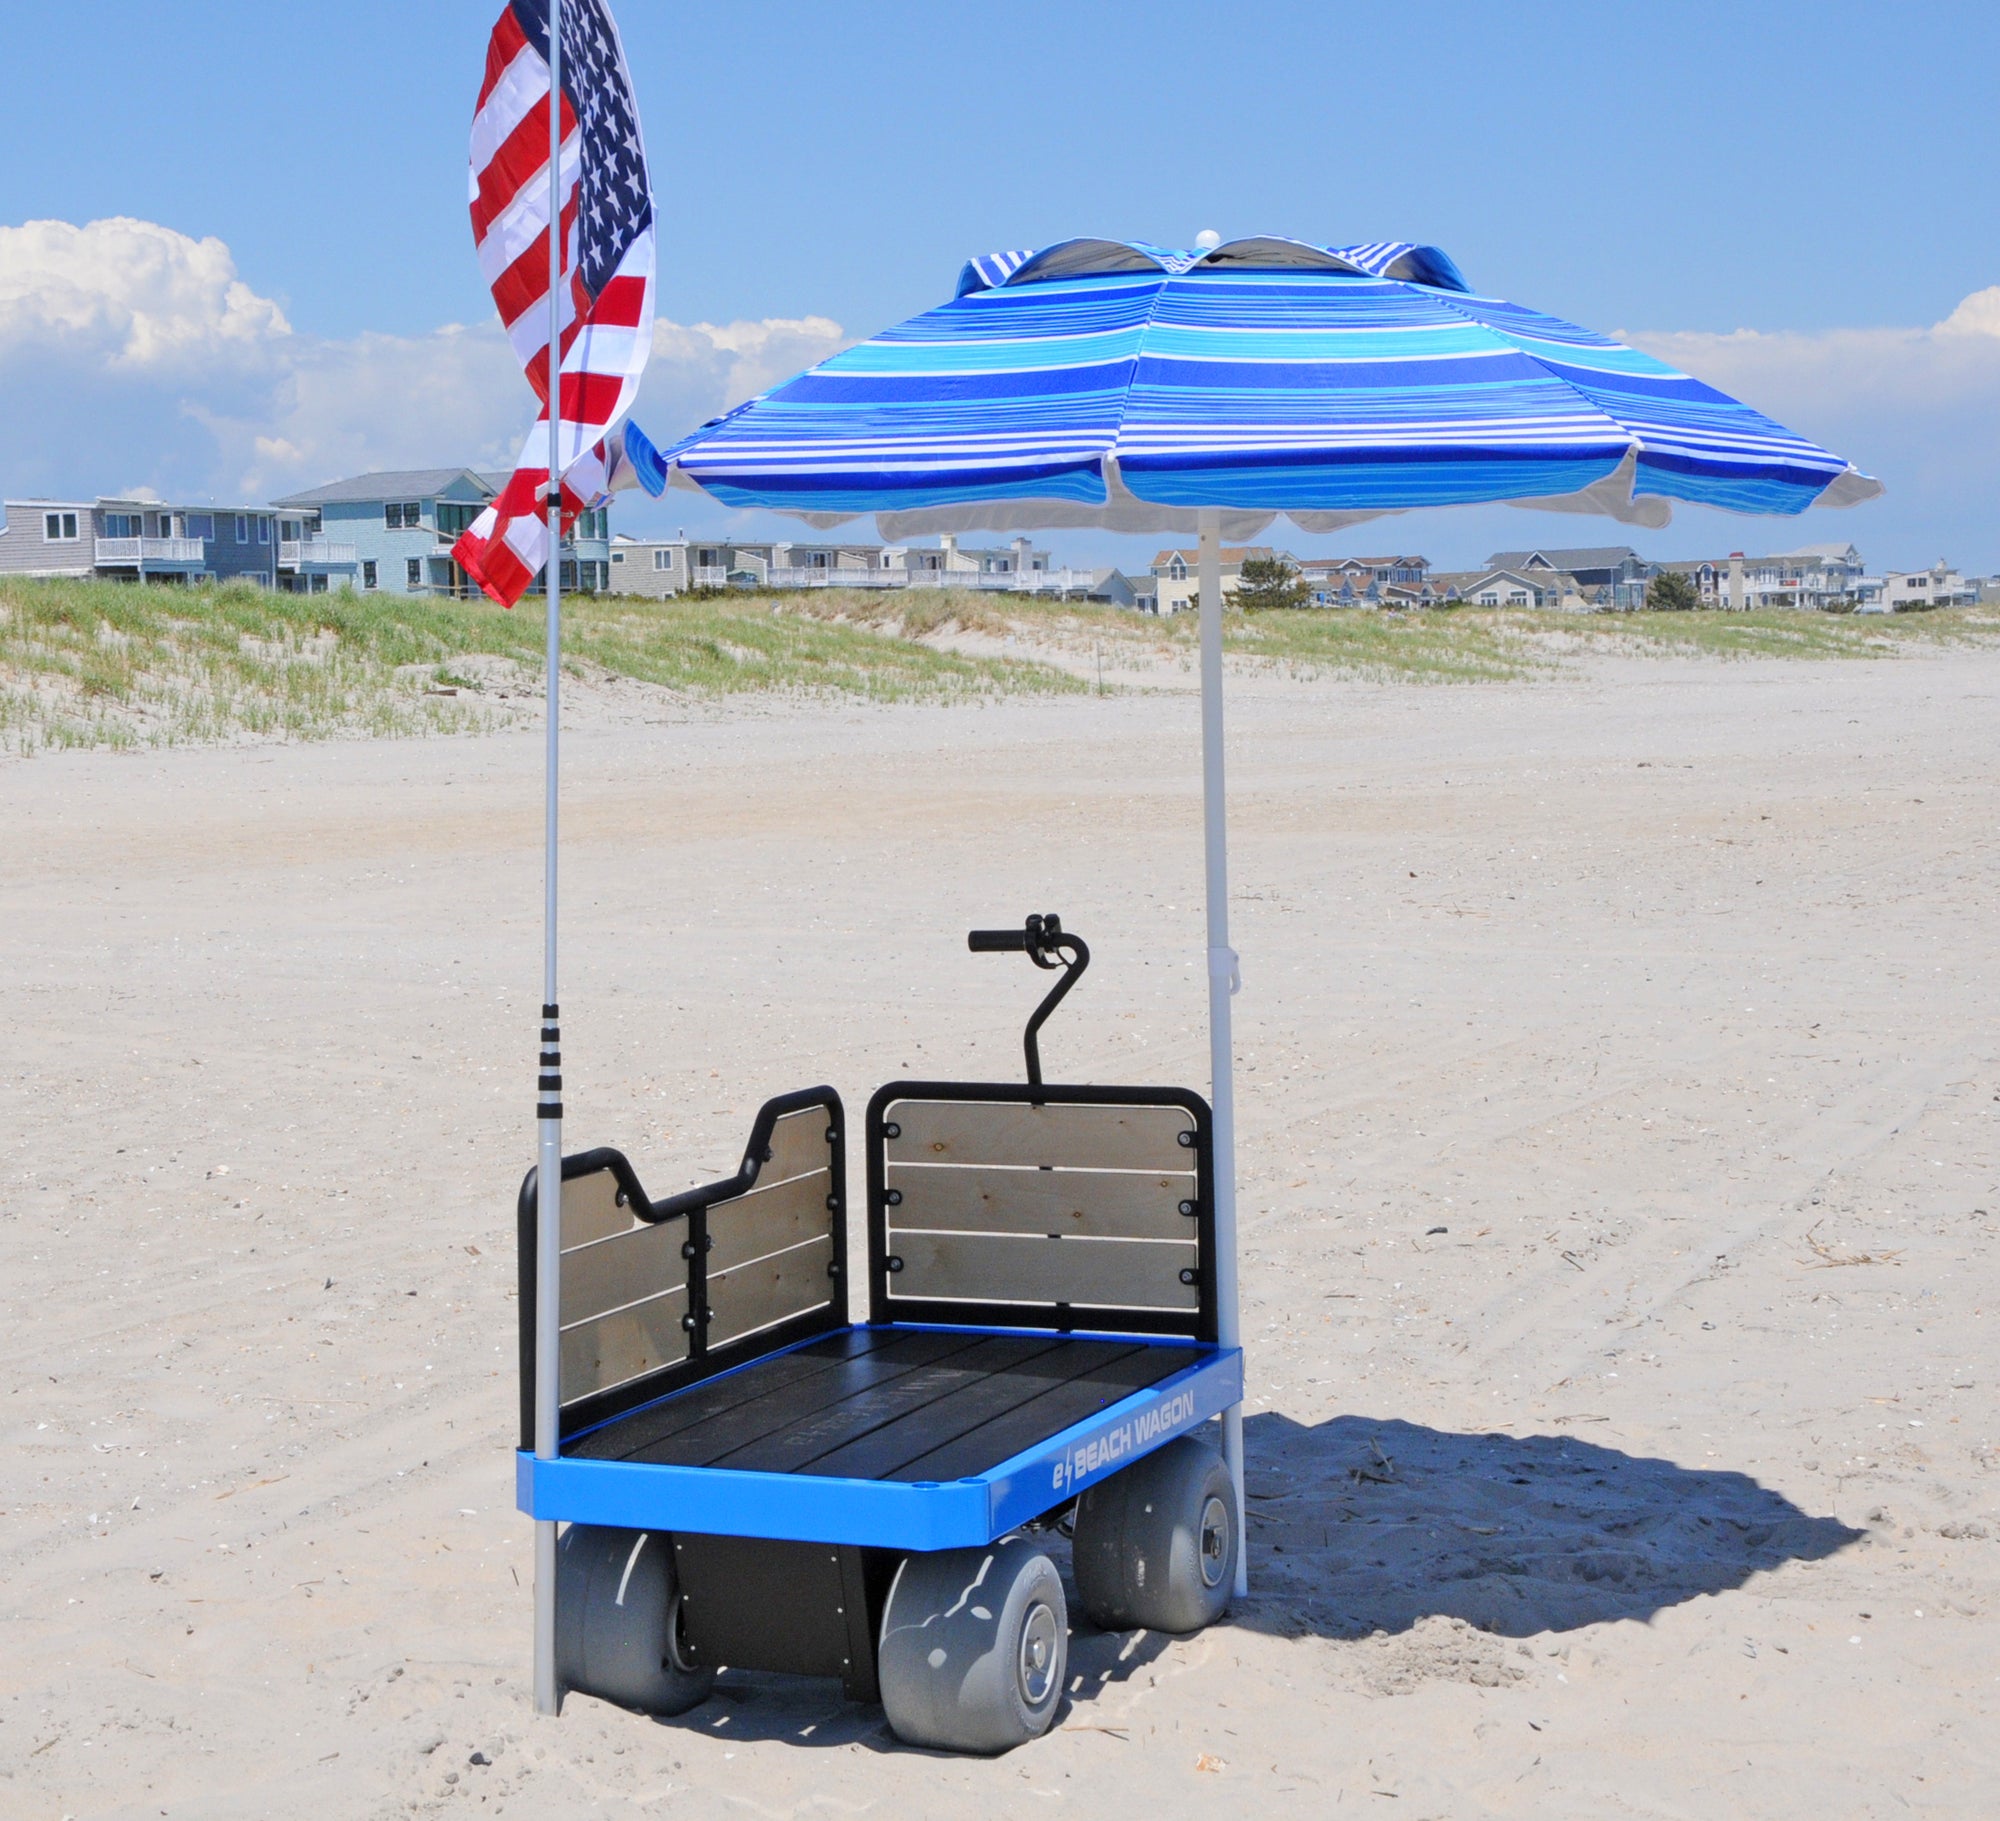 Electric Motorized Multi-Terrain Beach Cart Wagon